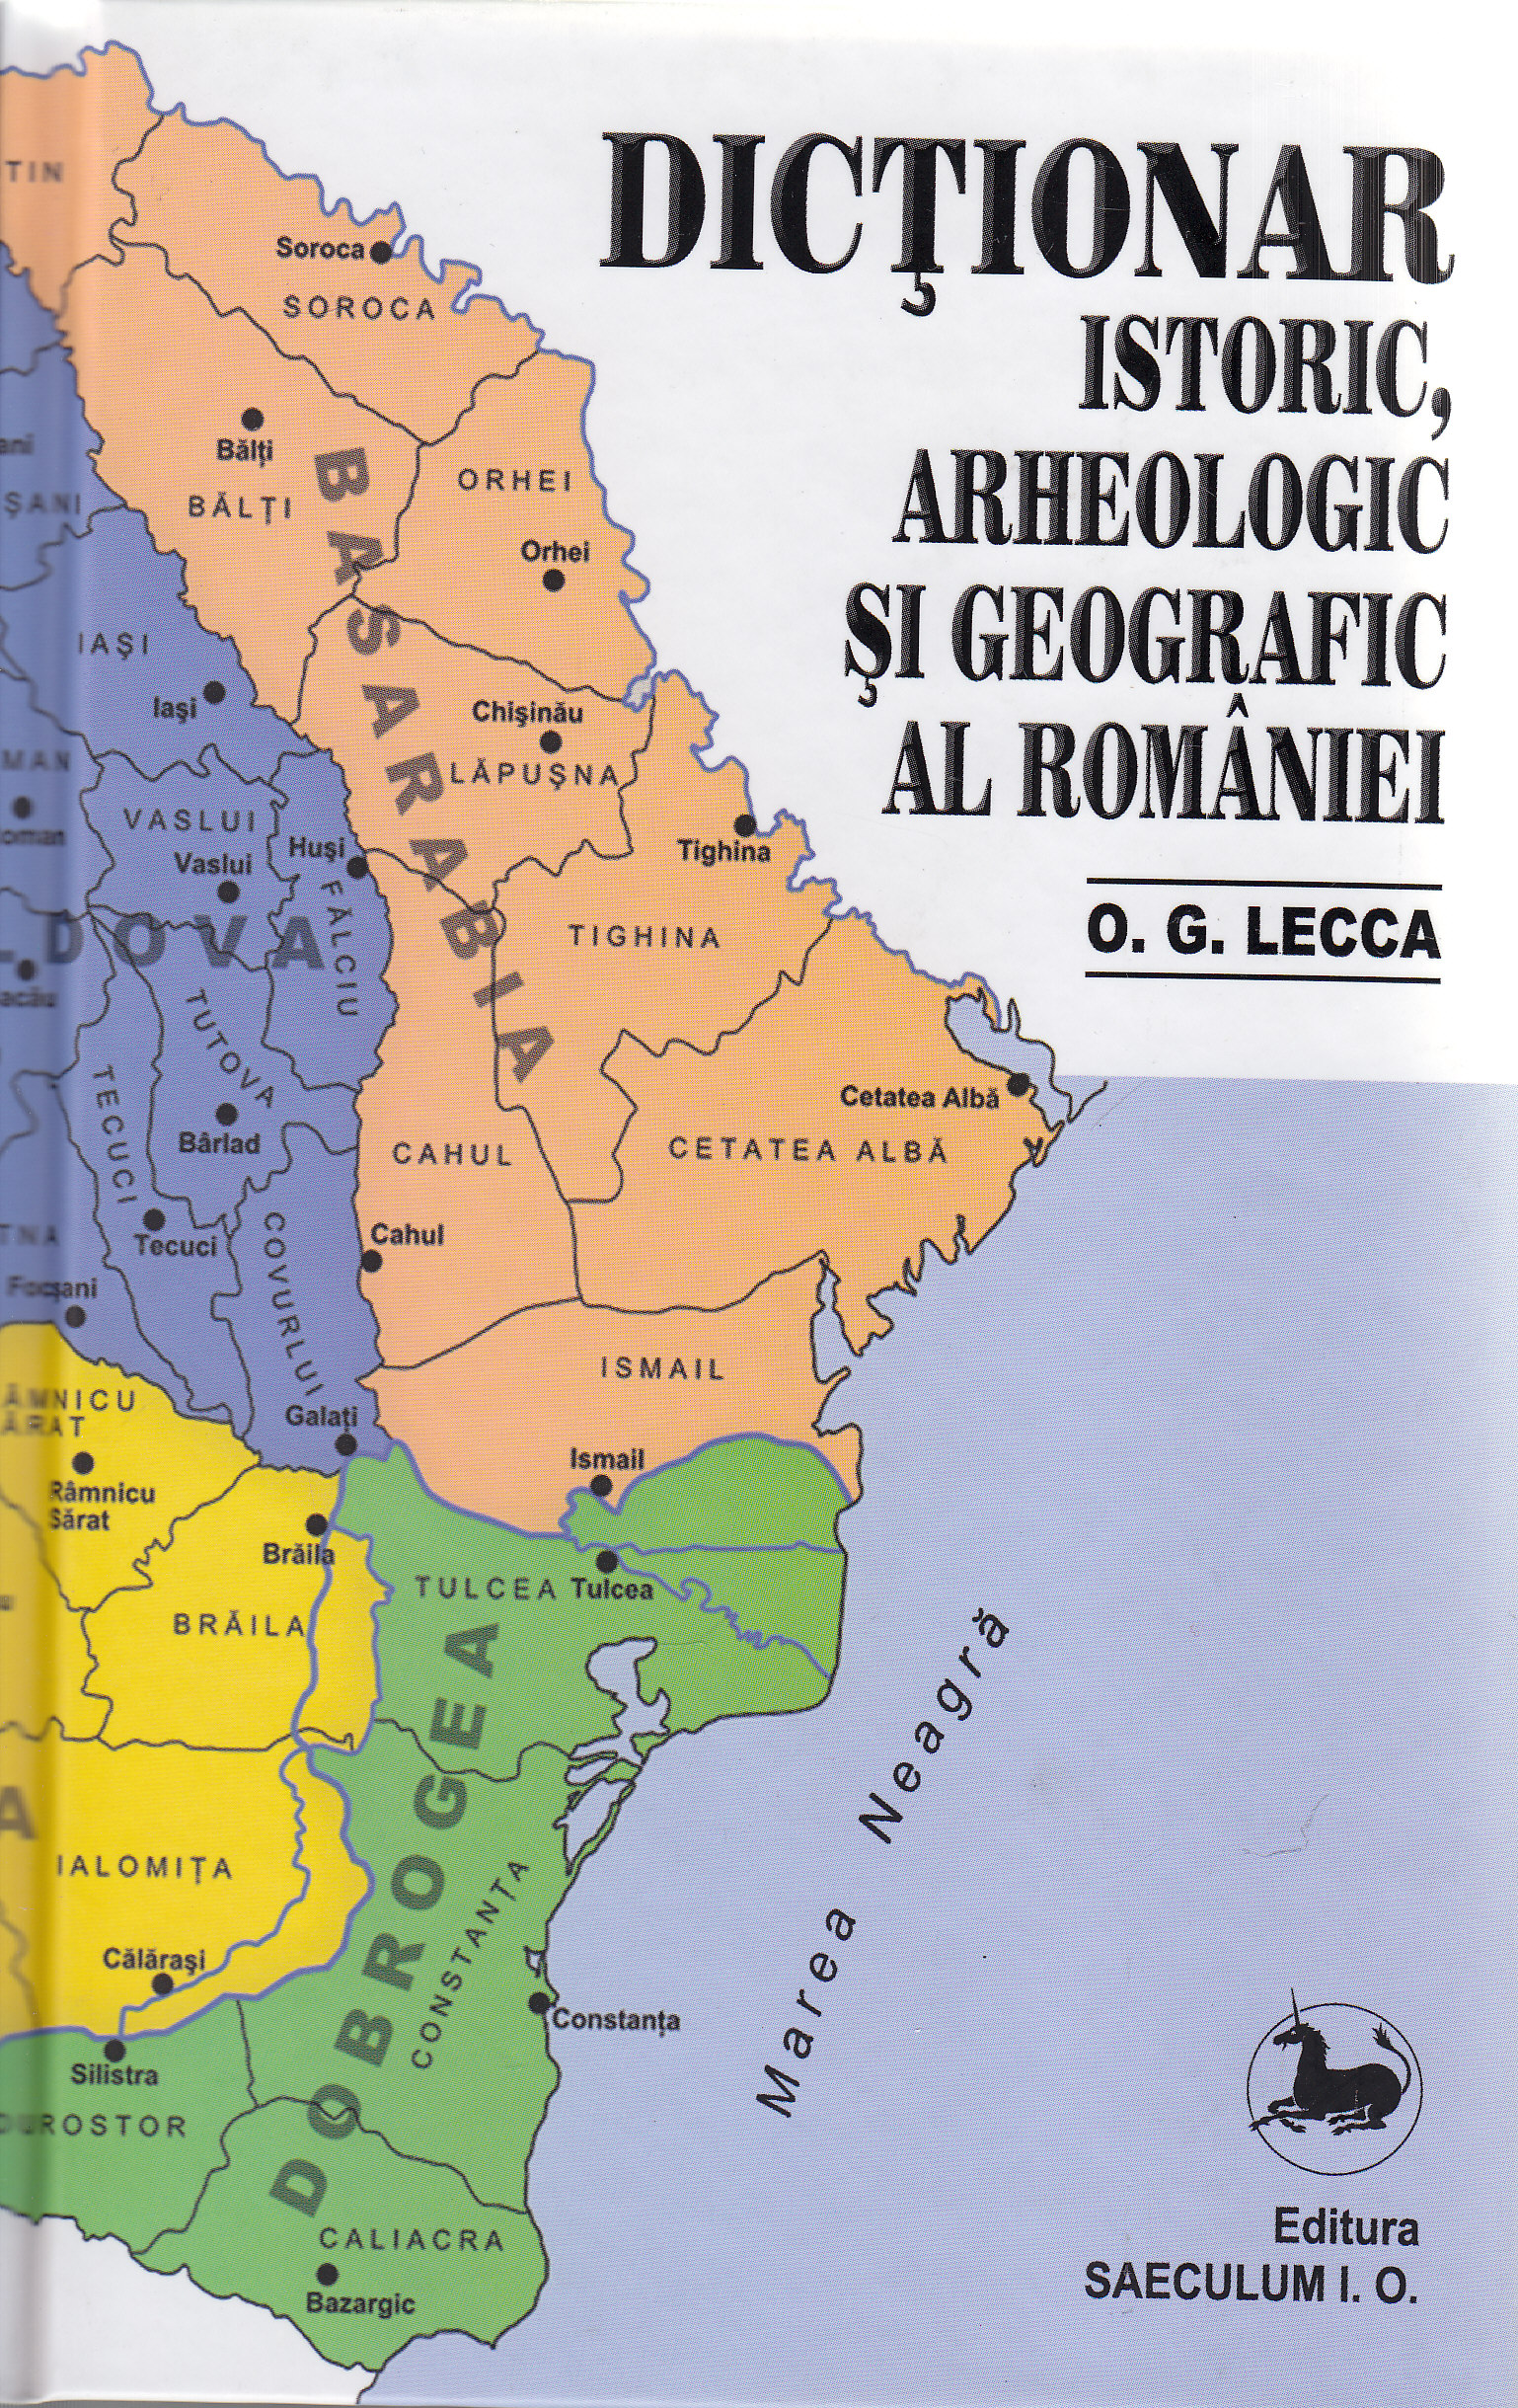 Dictionar Istoric, Arheologic si Geografic al Romaniei - O.G. Lecca